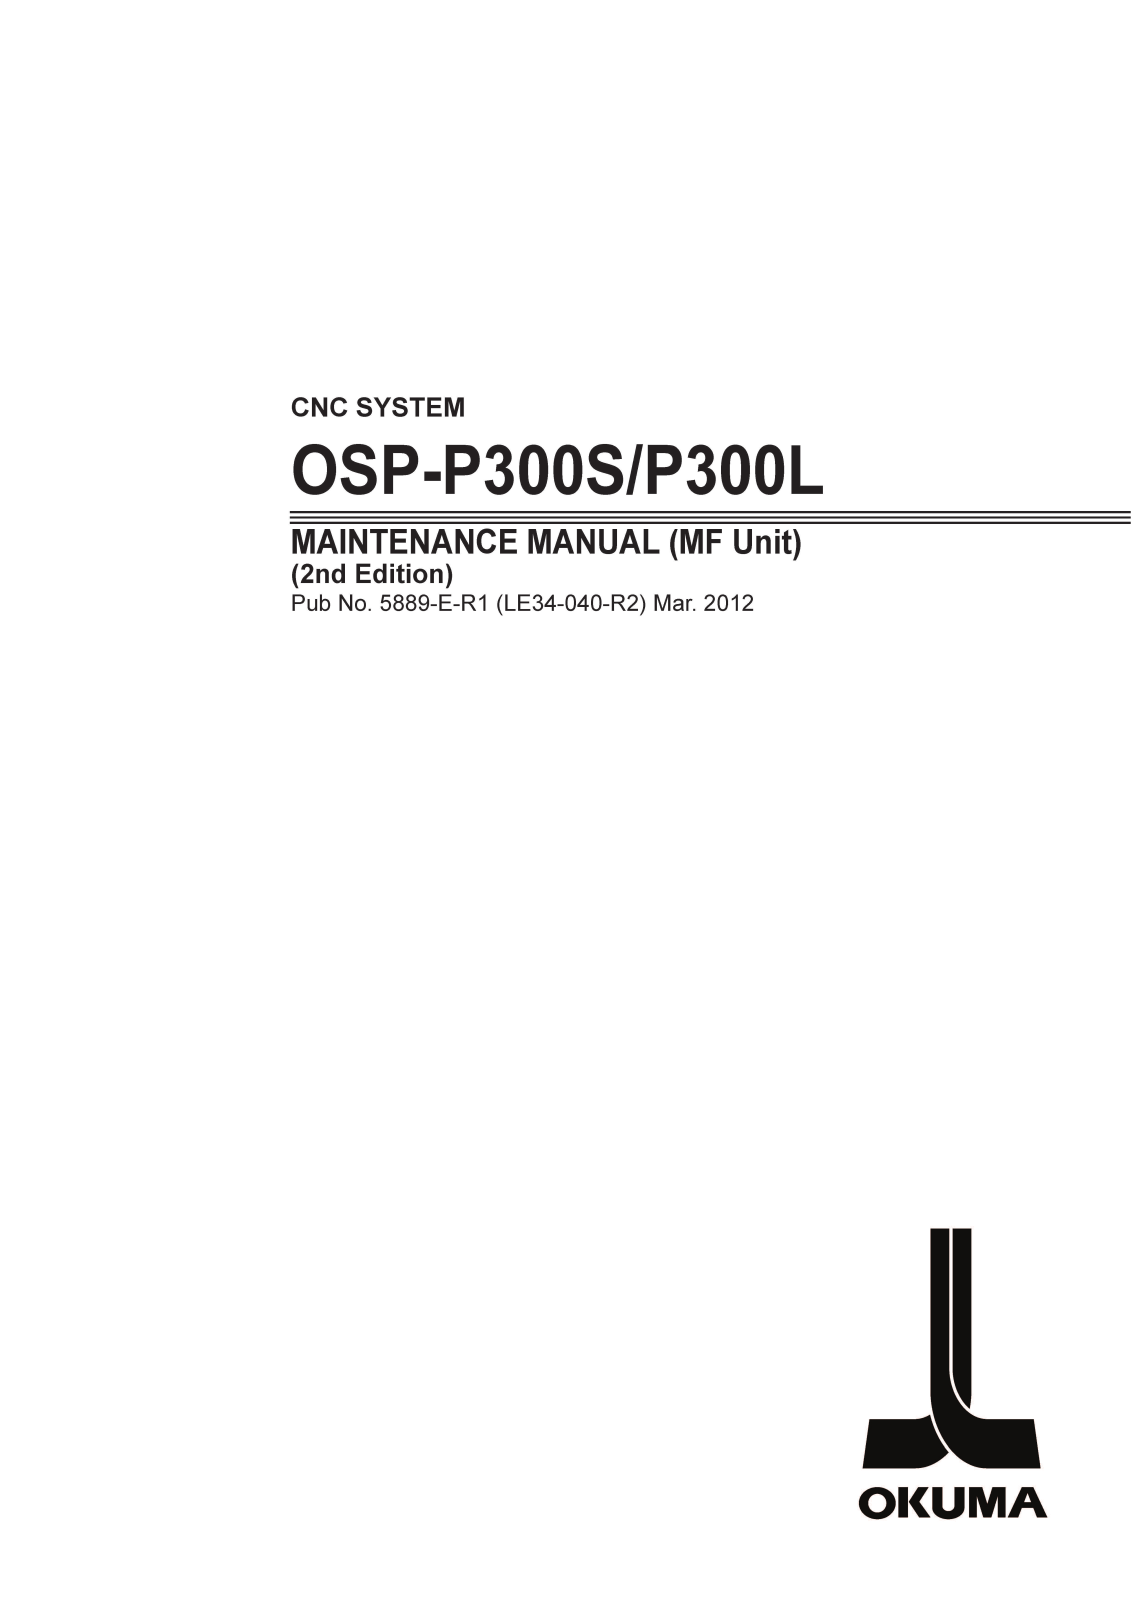 okuma OSP-P300S, OSP-P300L MF Maintenance Manual